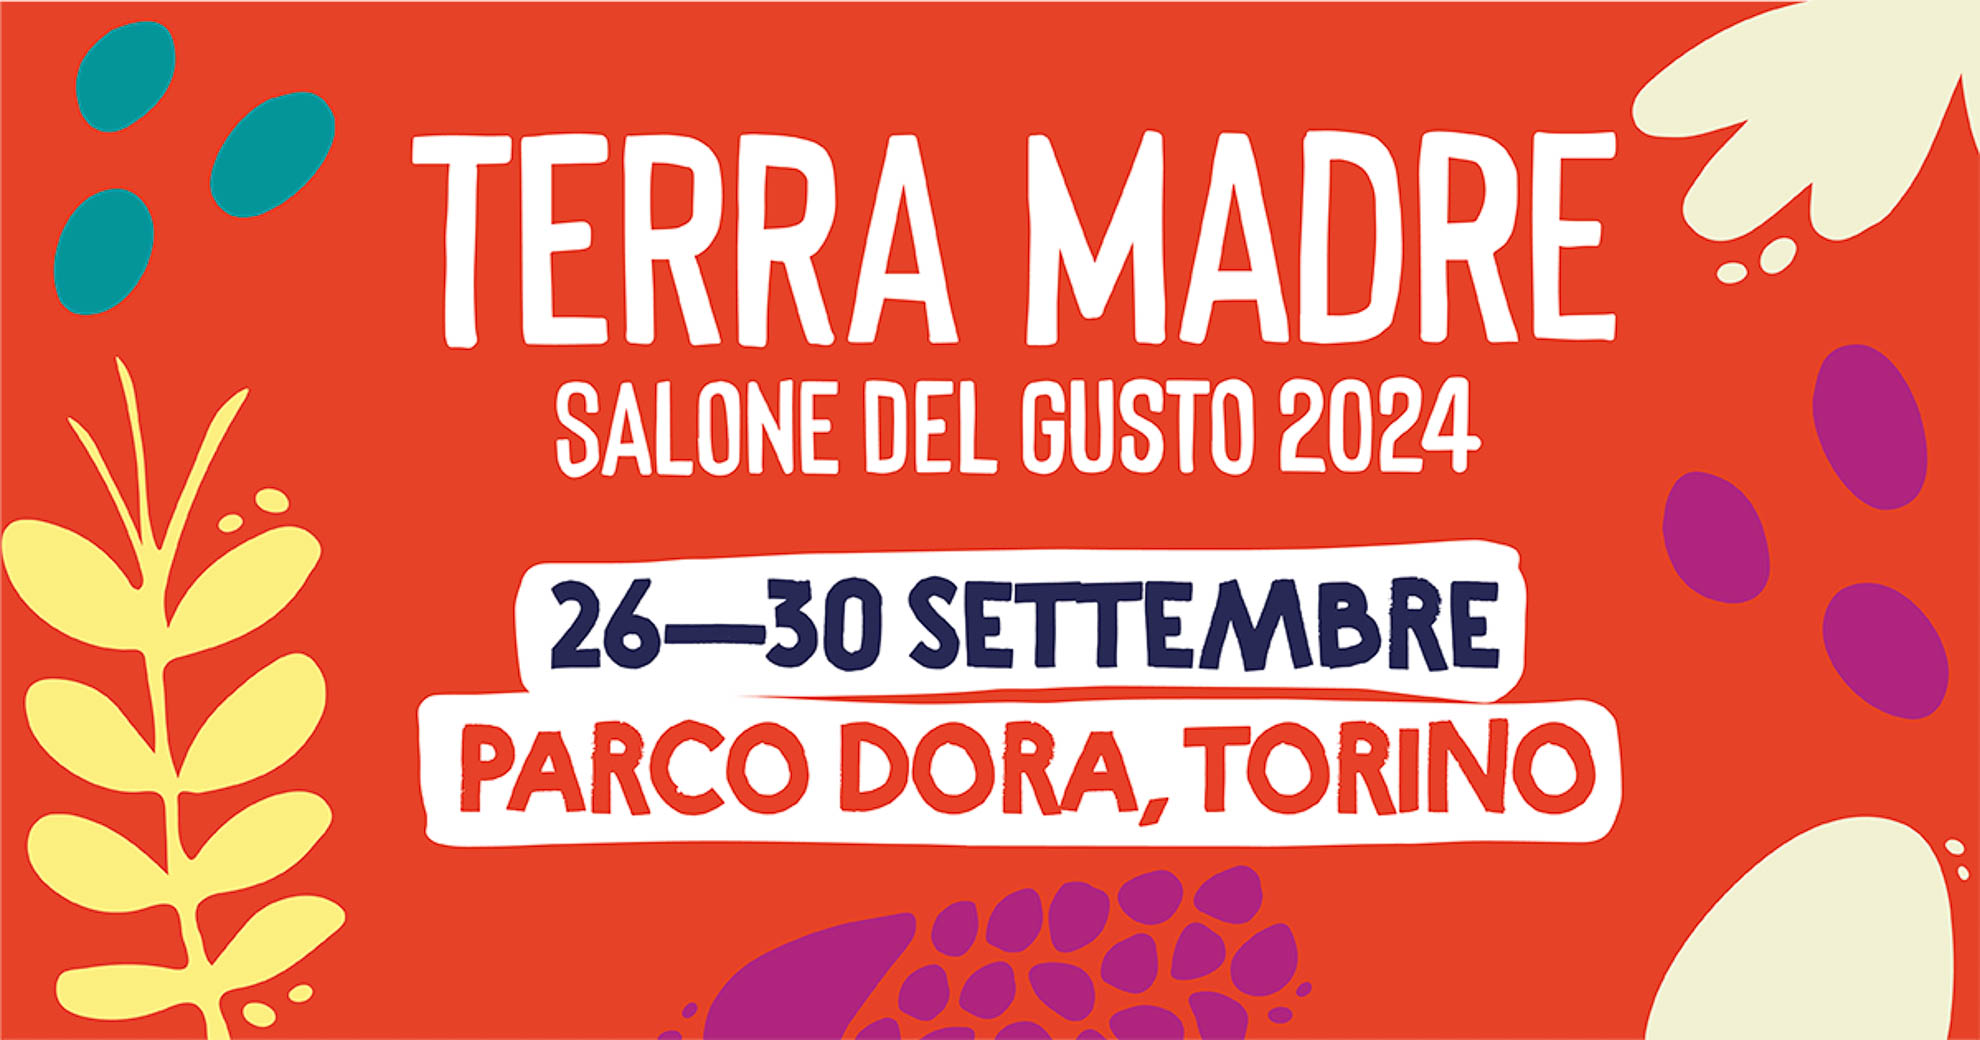 The Road to Terra Madre - Salone del Gusto 2024